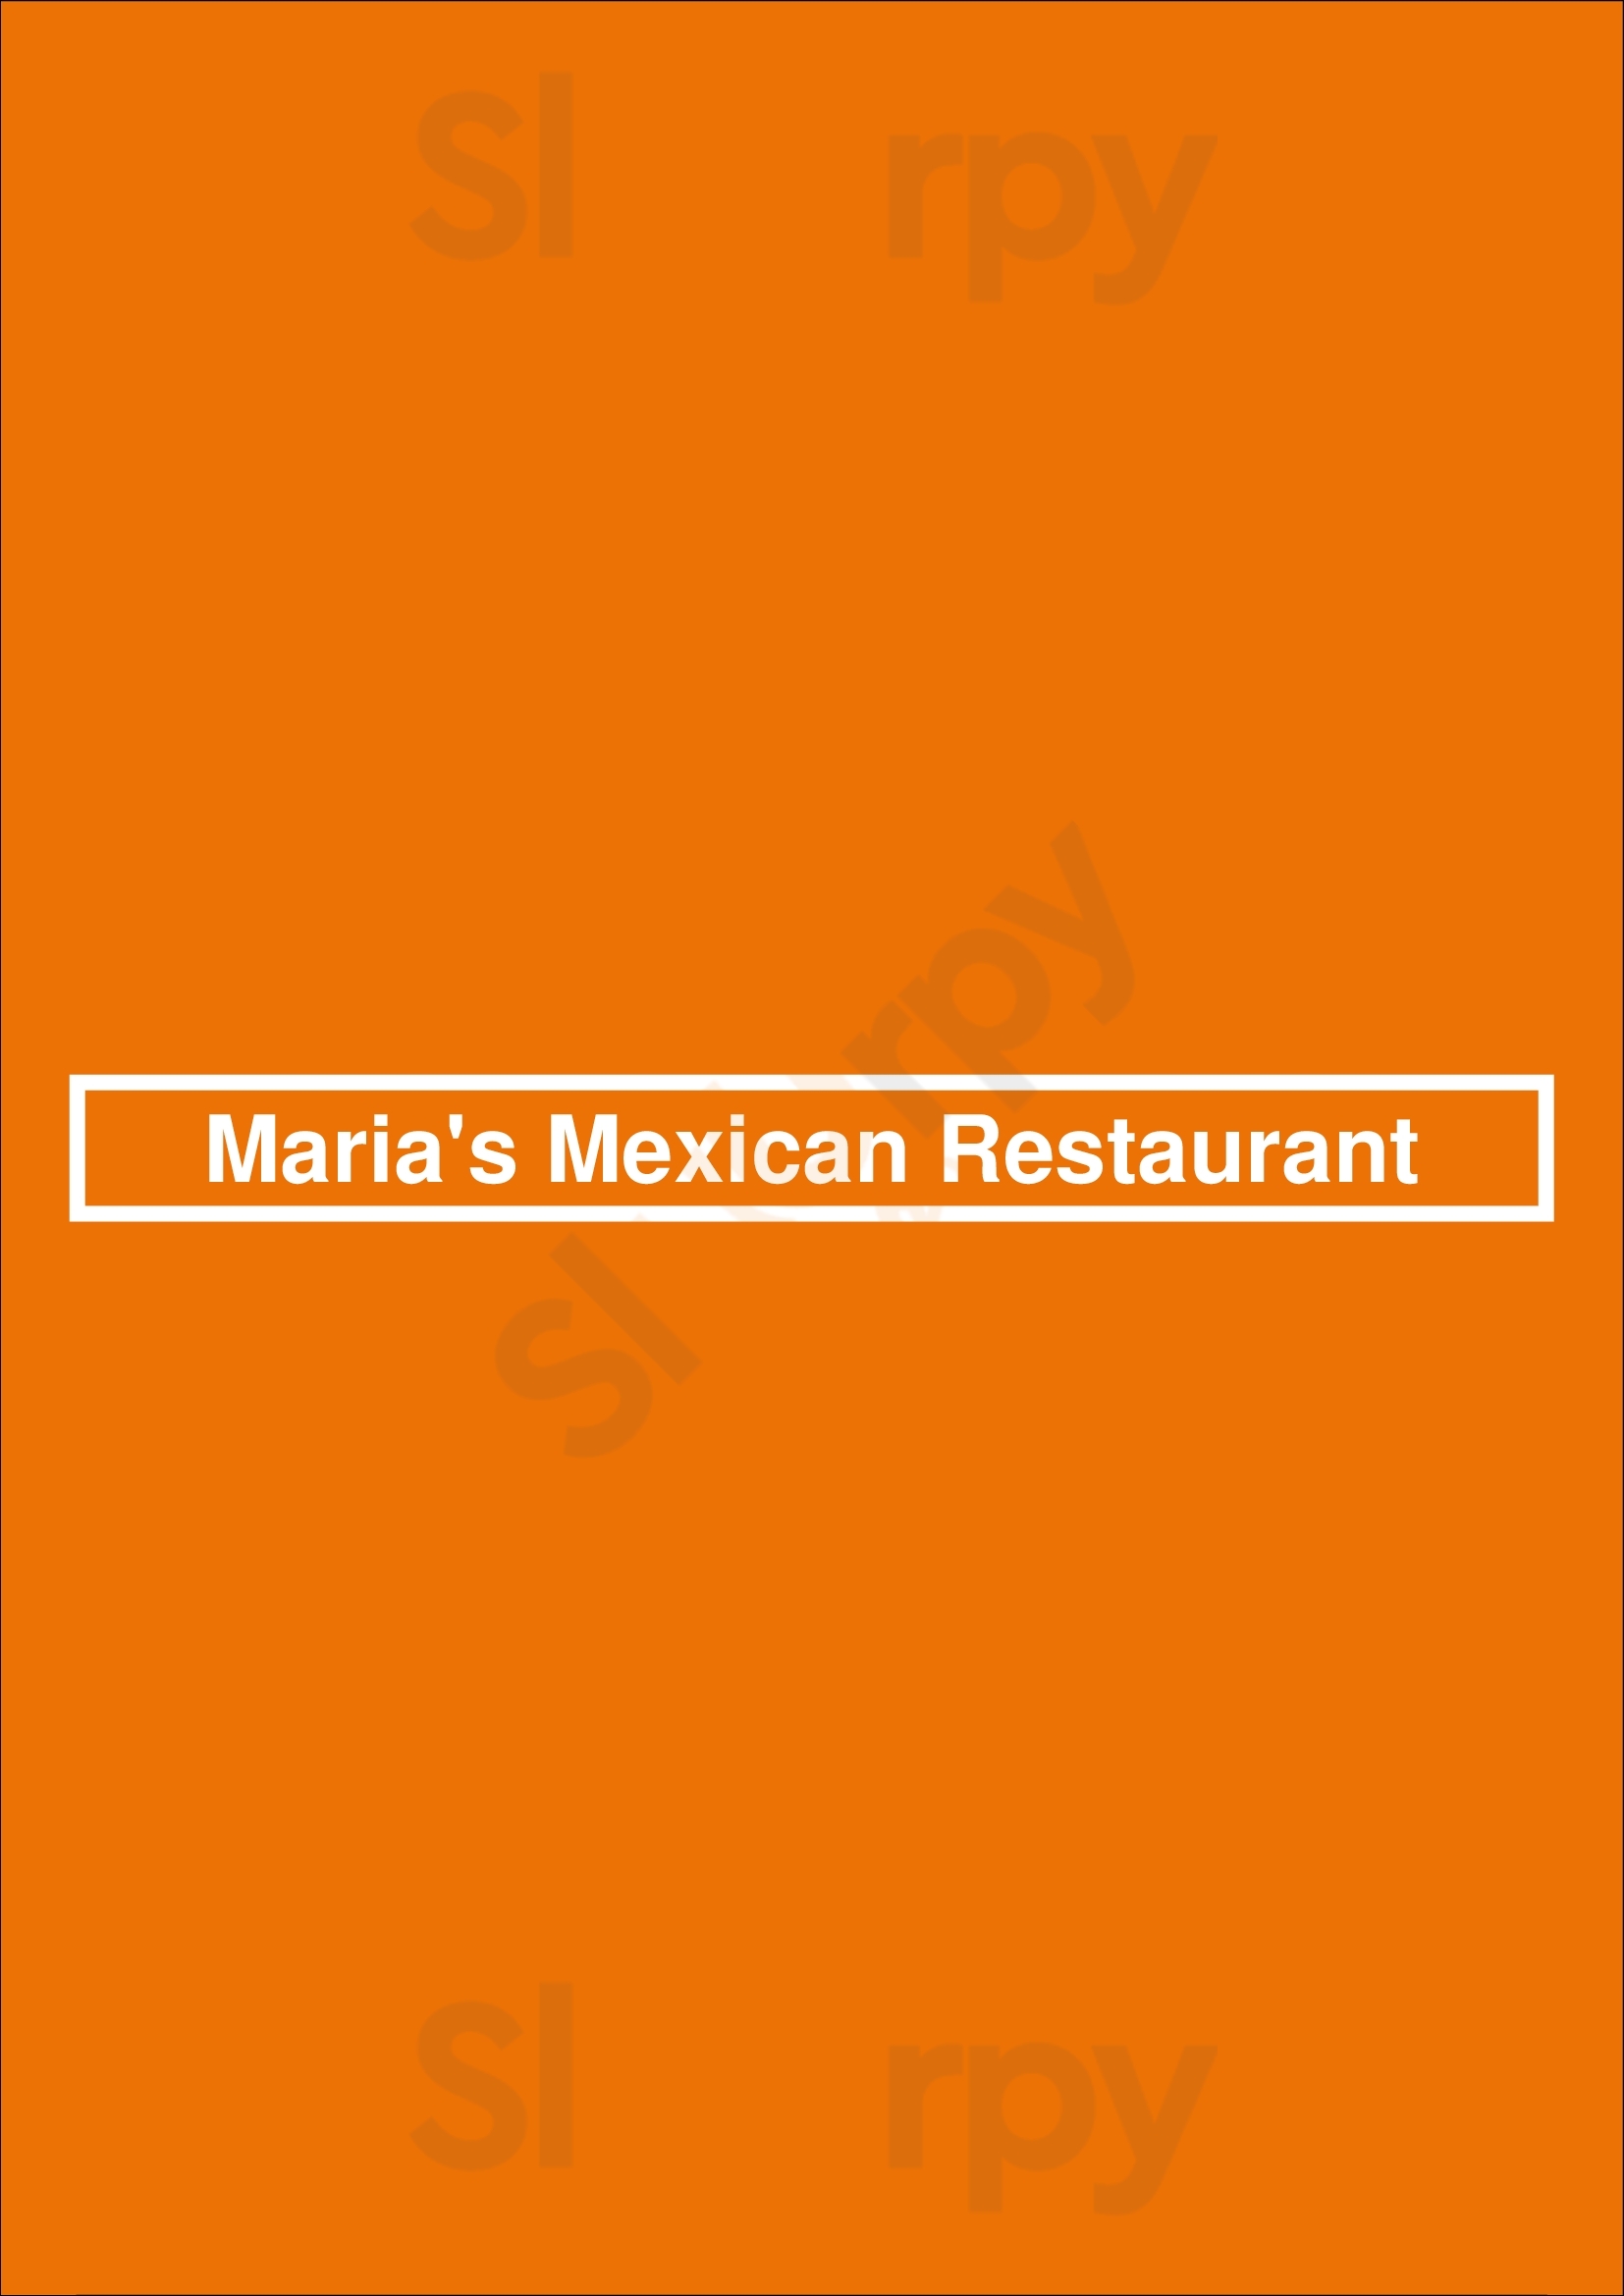 Maria's Mexican Restaurant Chicago Menu - 1